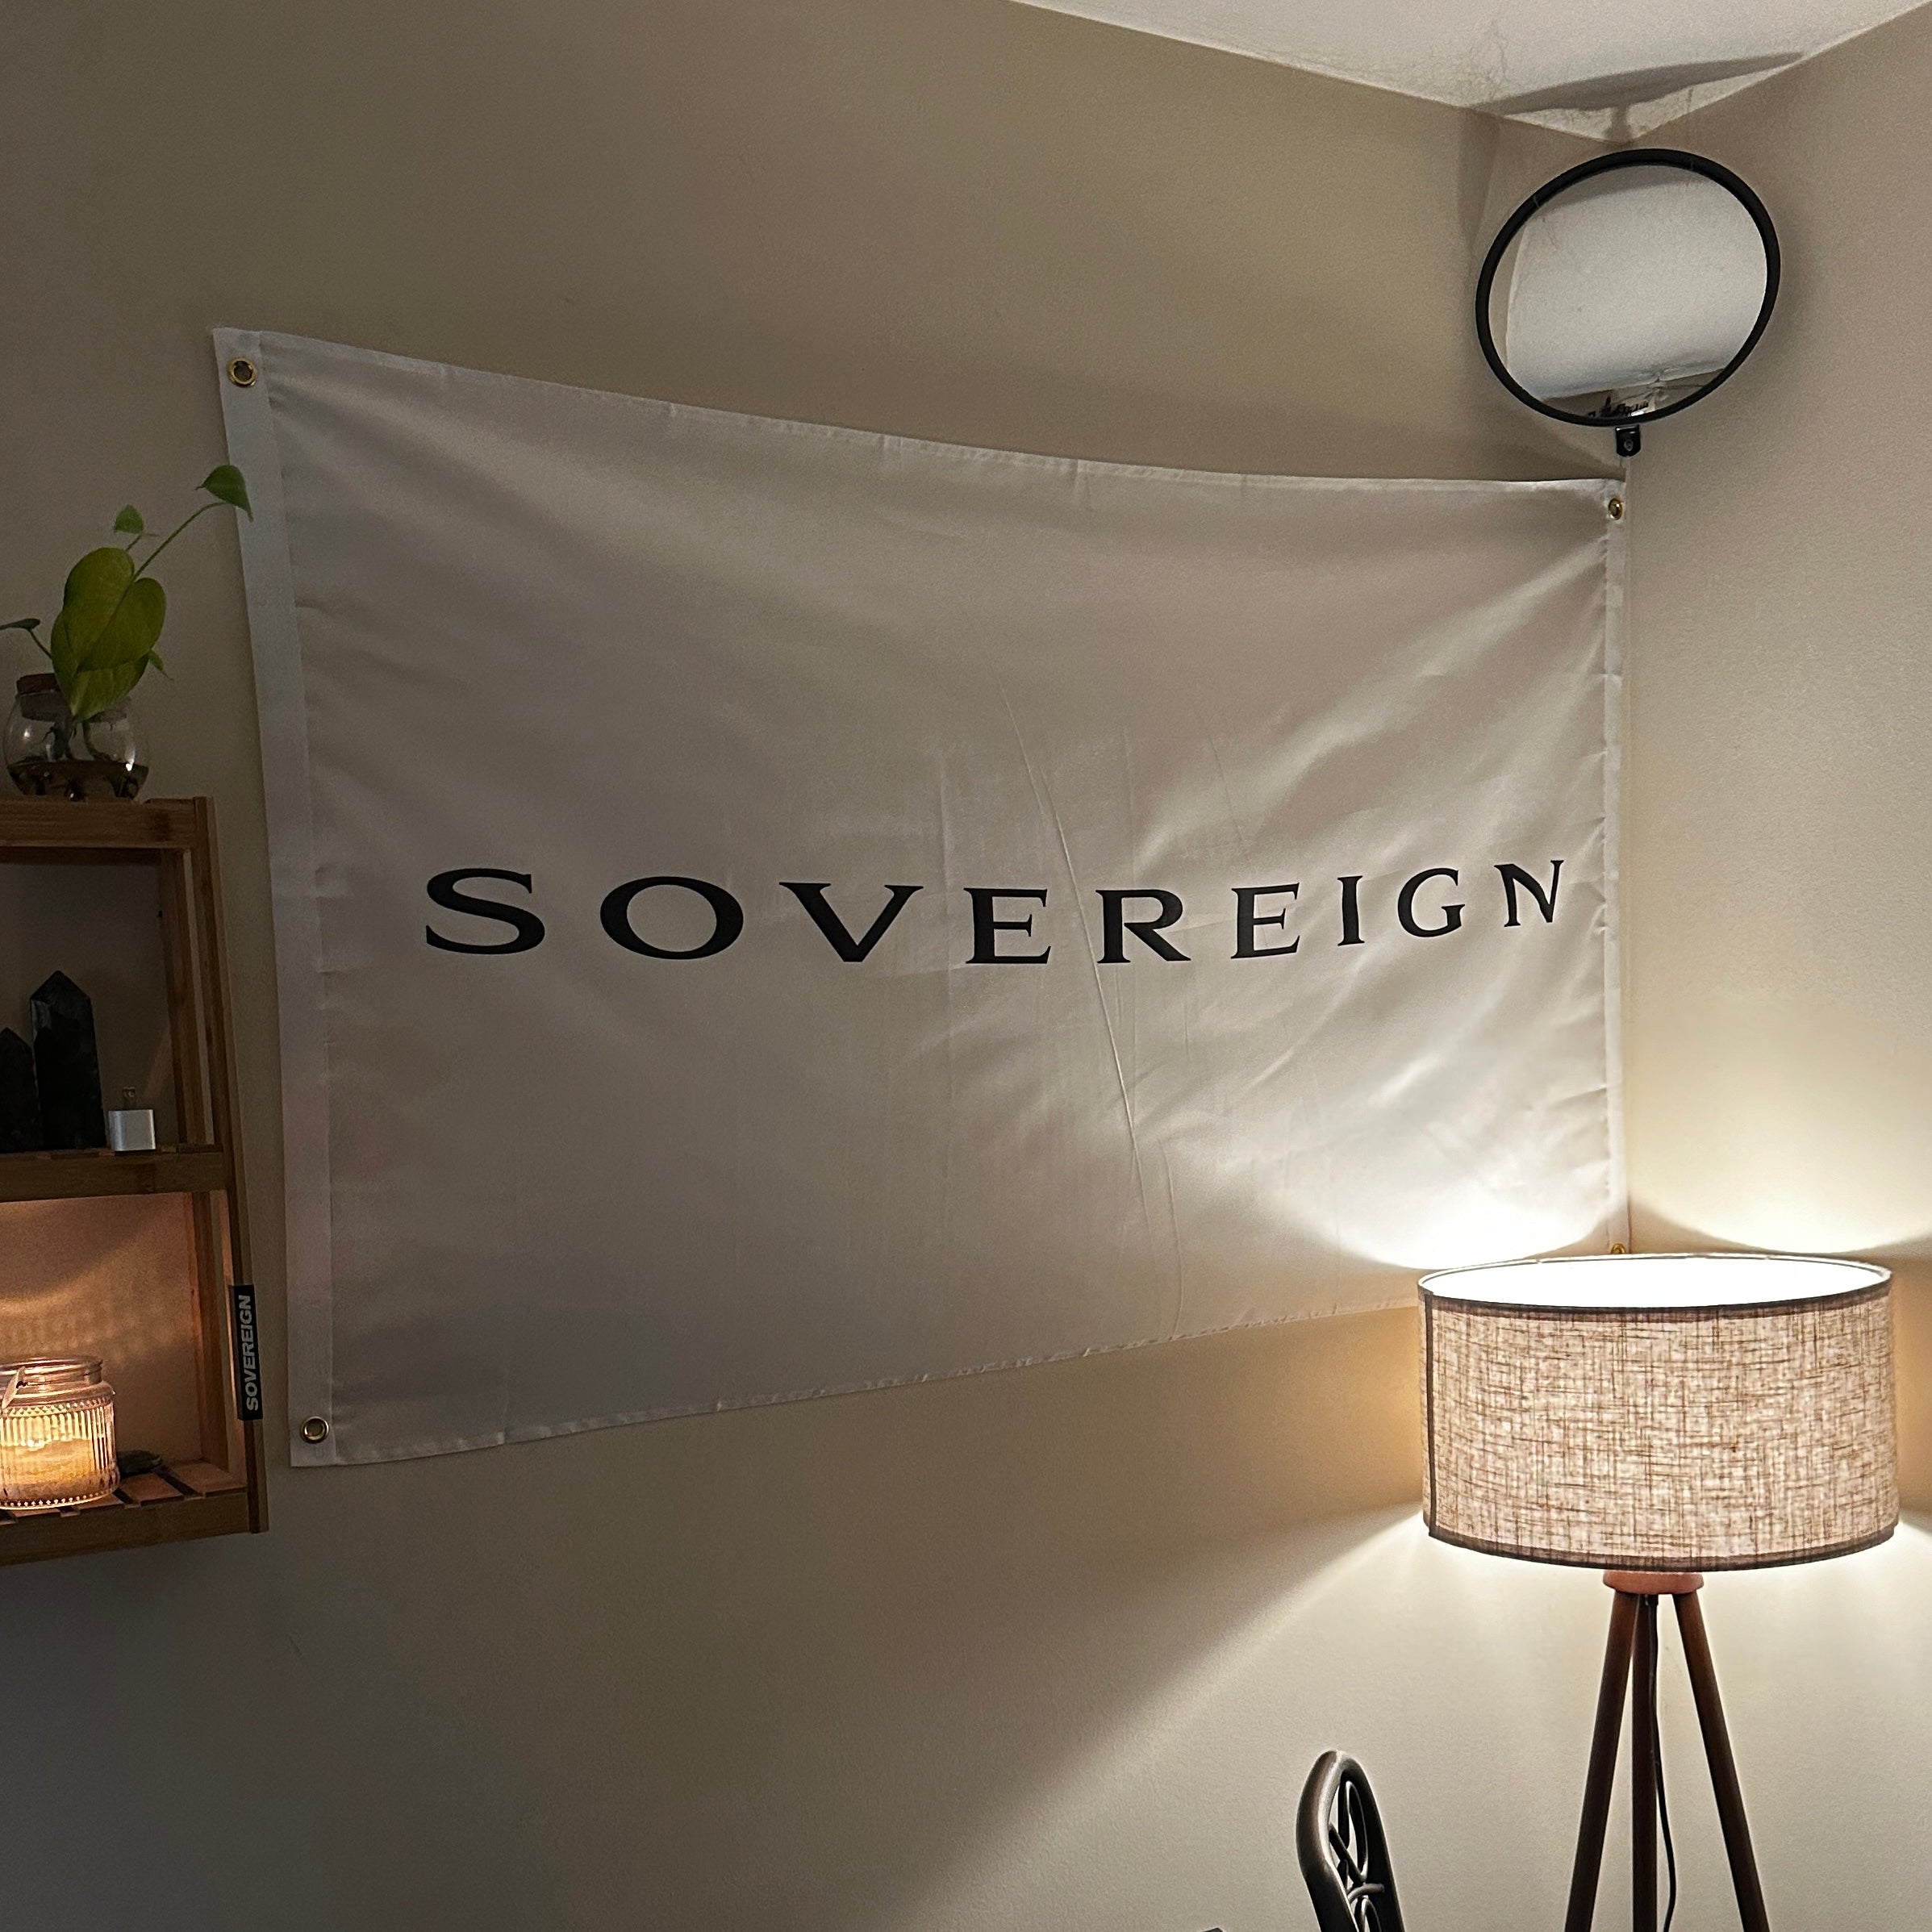 sovereign lifestyle gym flag sovereign